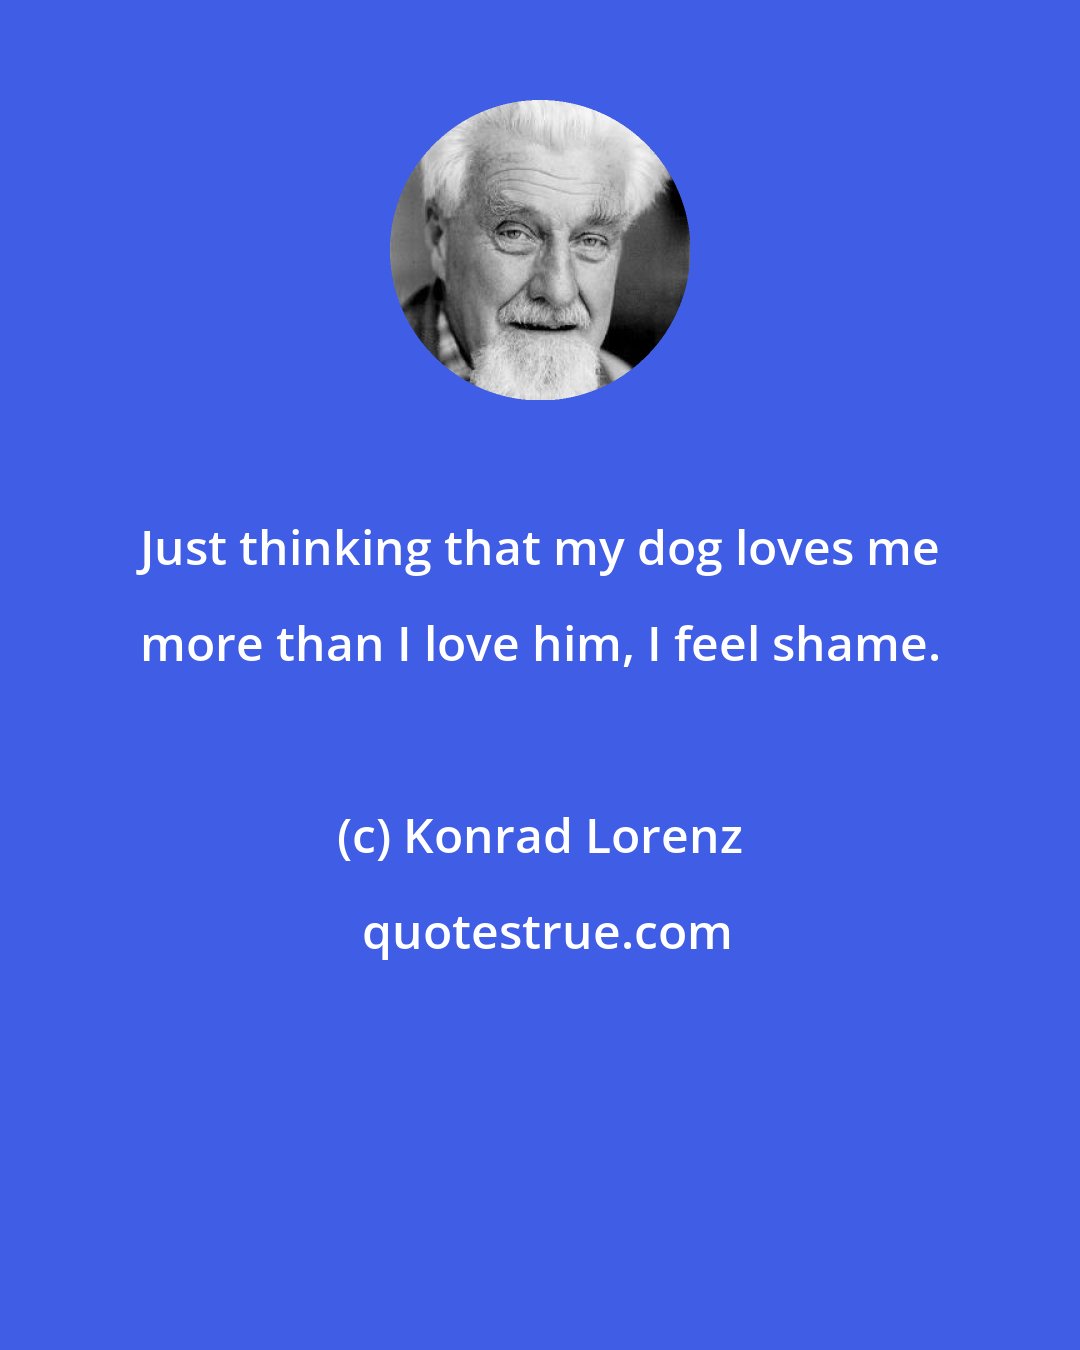 Konrad Lorenz: Just thinking that my dog loves me more than I love him, I feel shame.